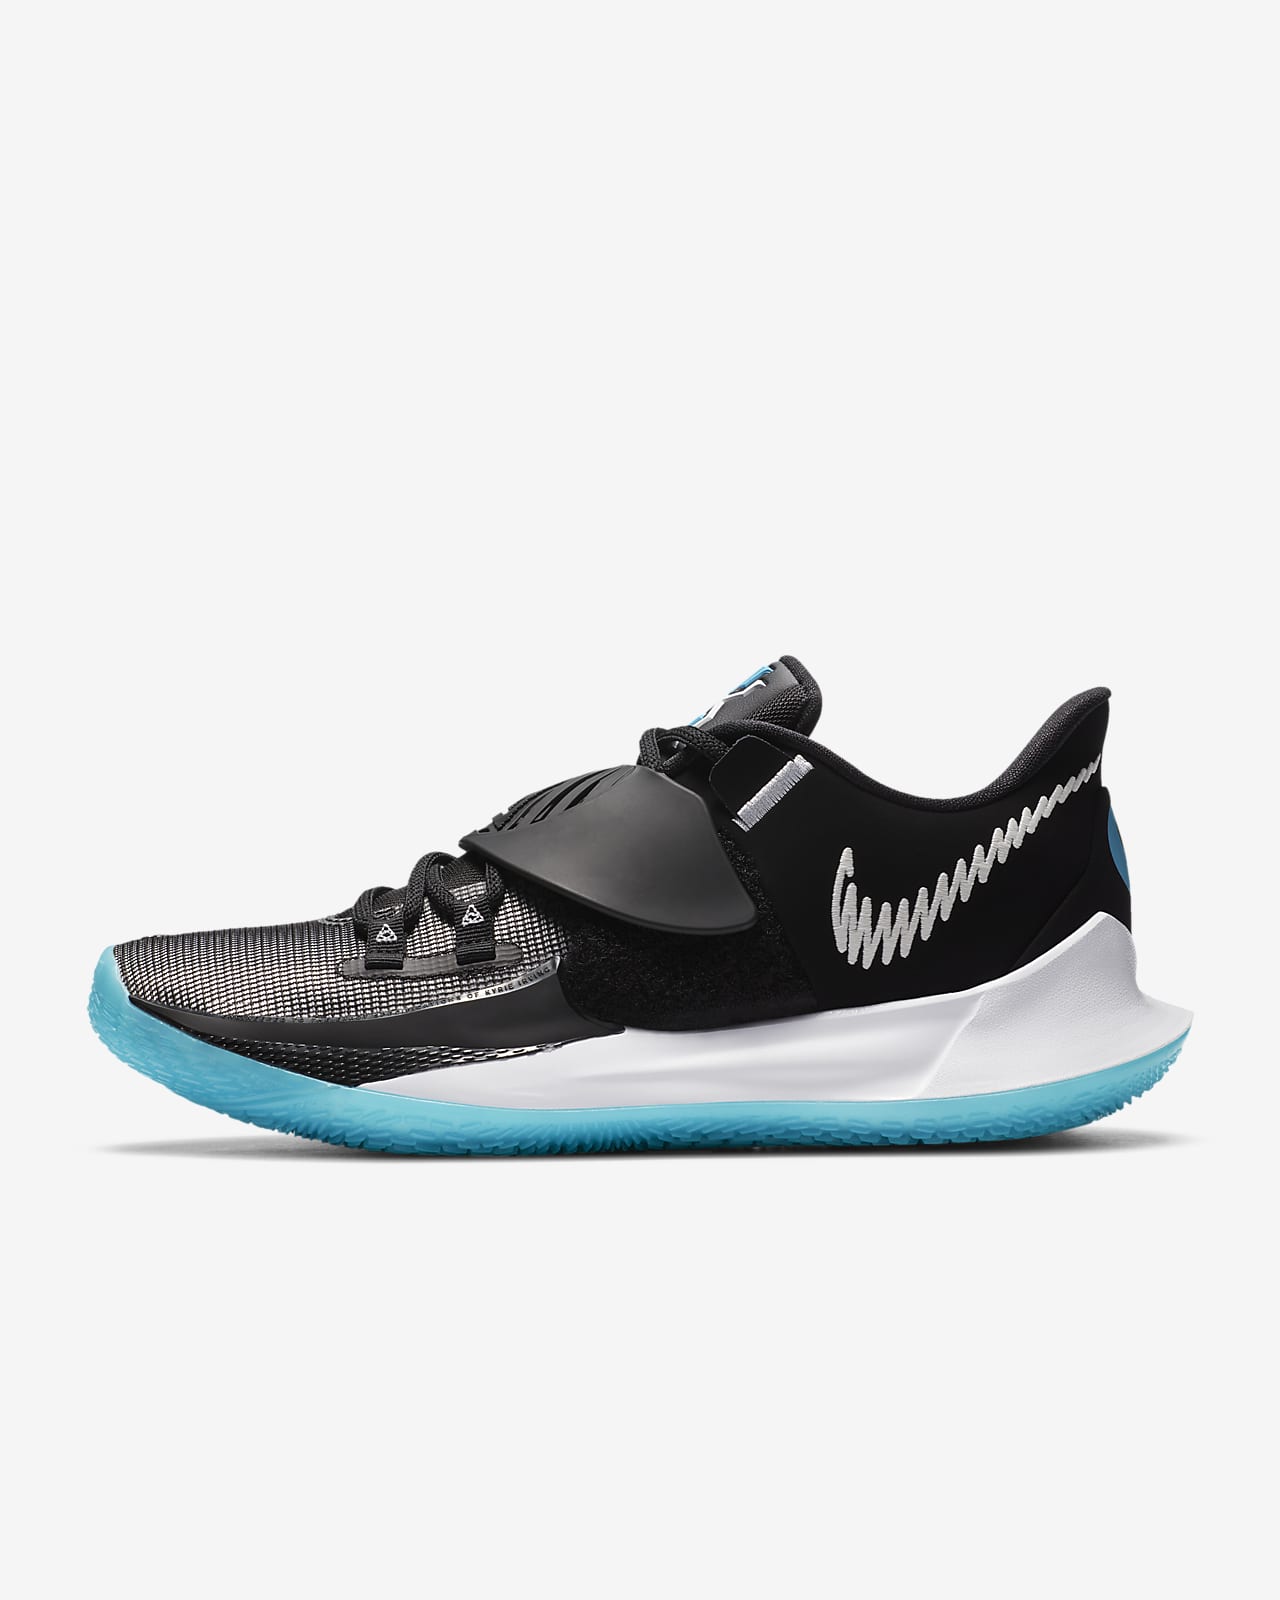 Kyrie Low 3 'Moon' Basketball Shoe. Nike IL